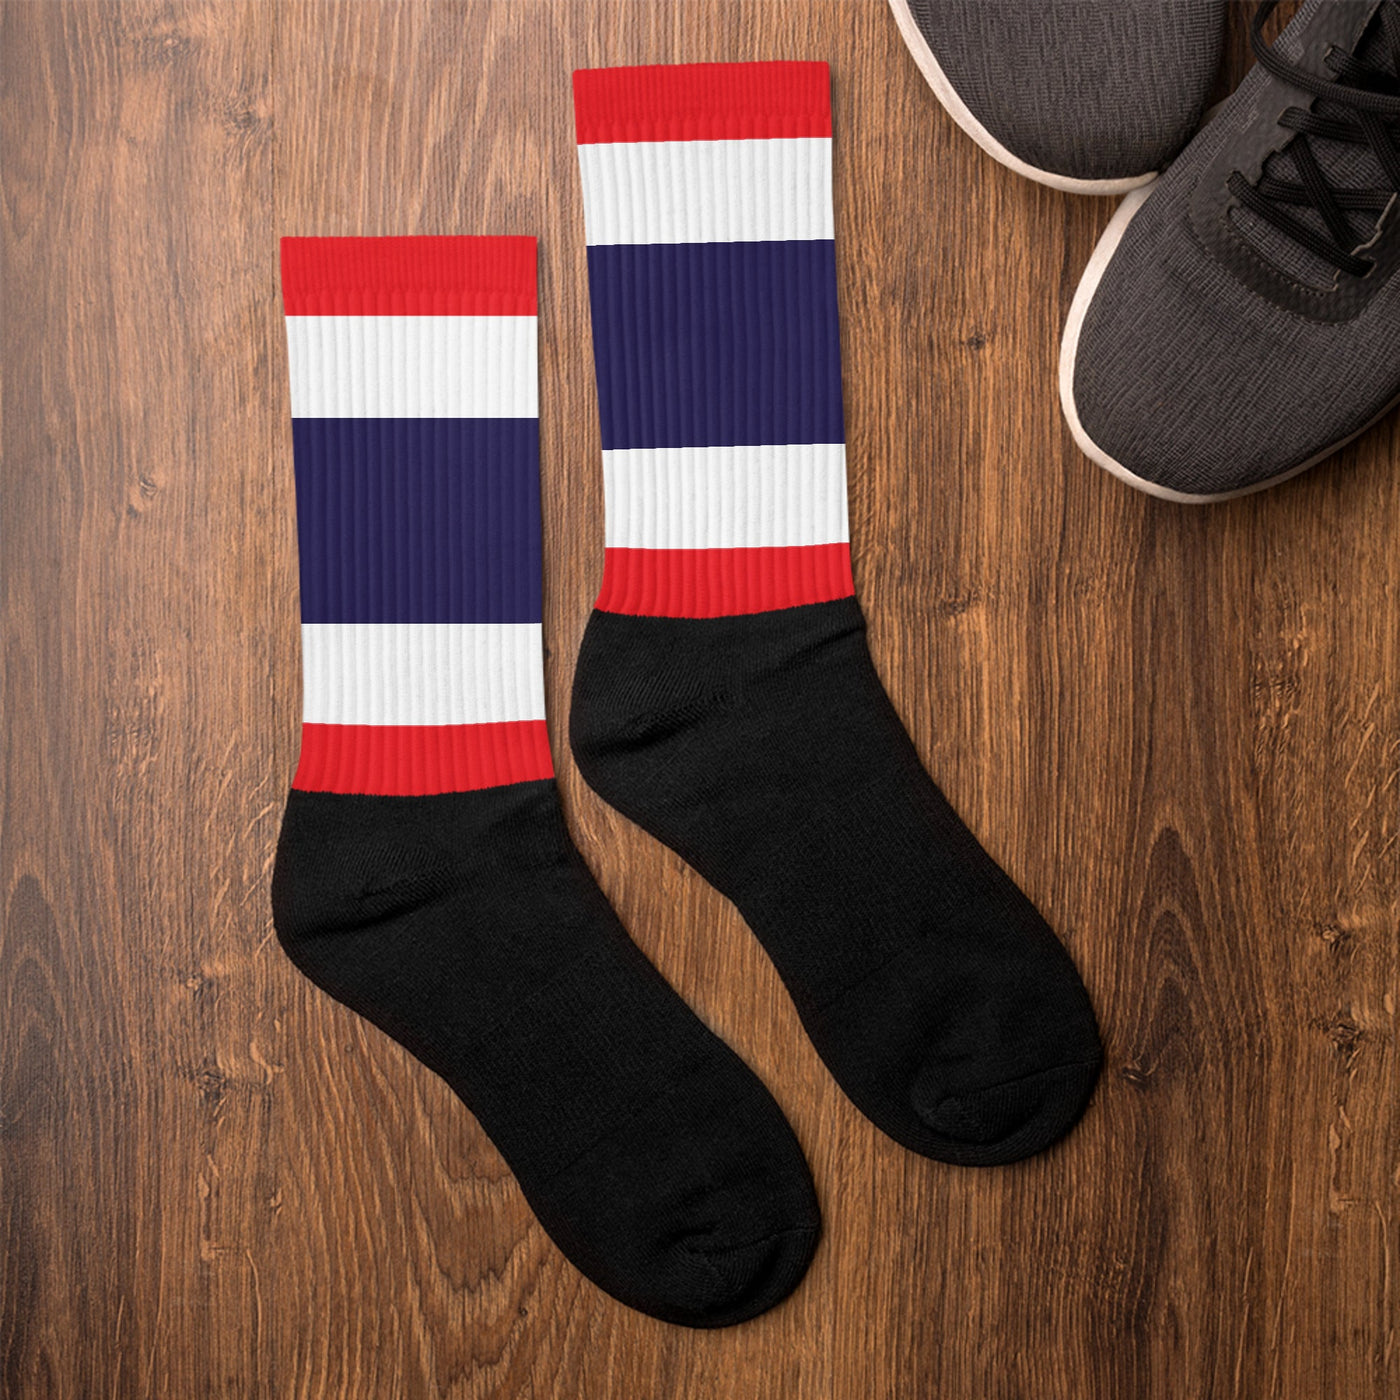 Thailand Socks - Ezra's Clothing